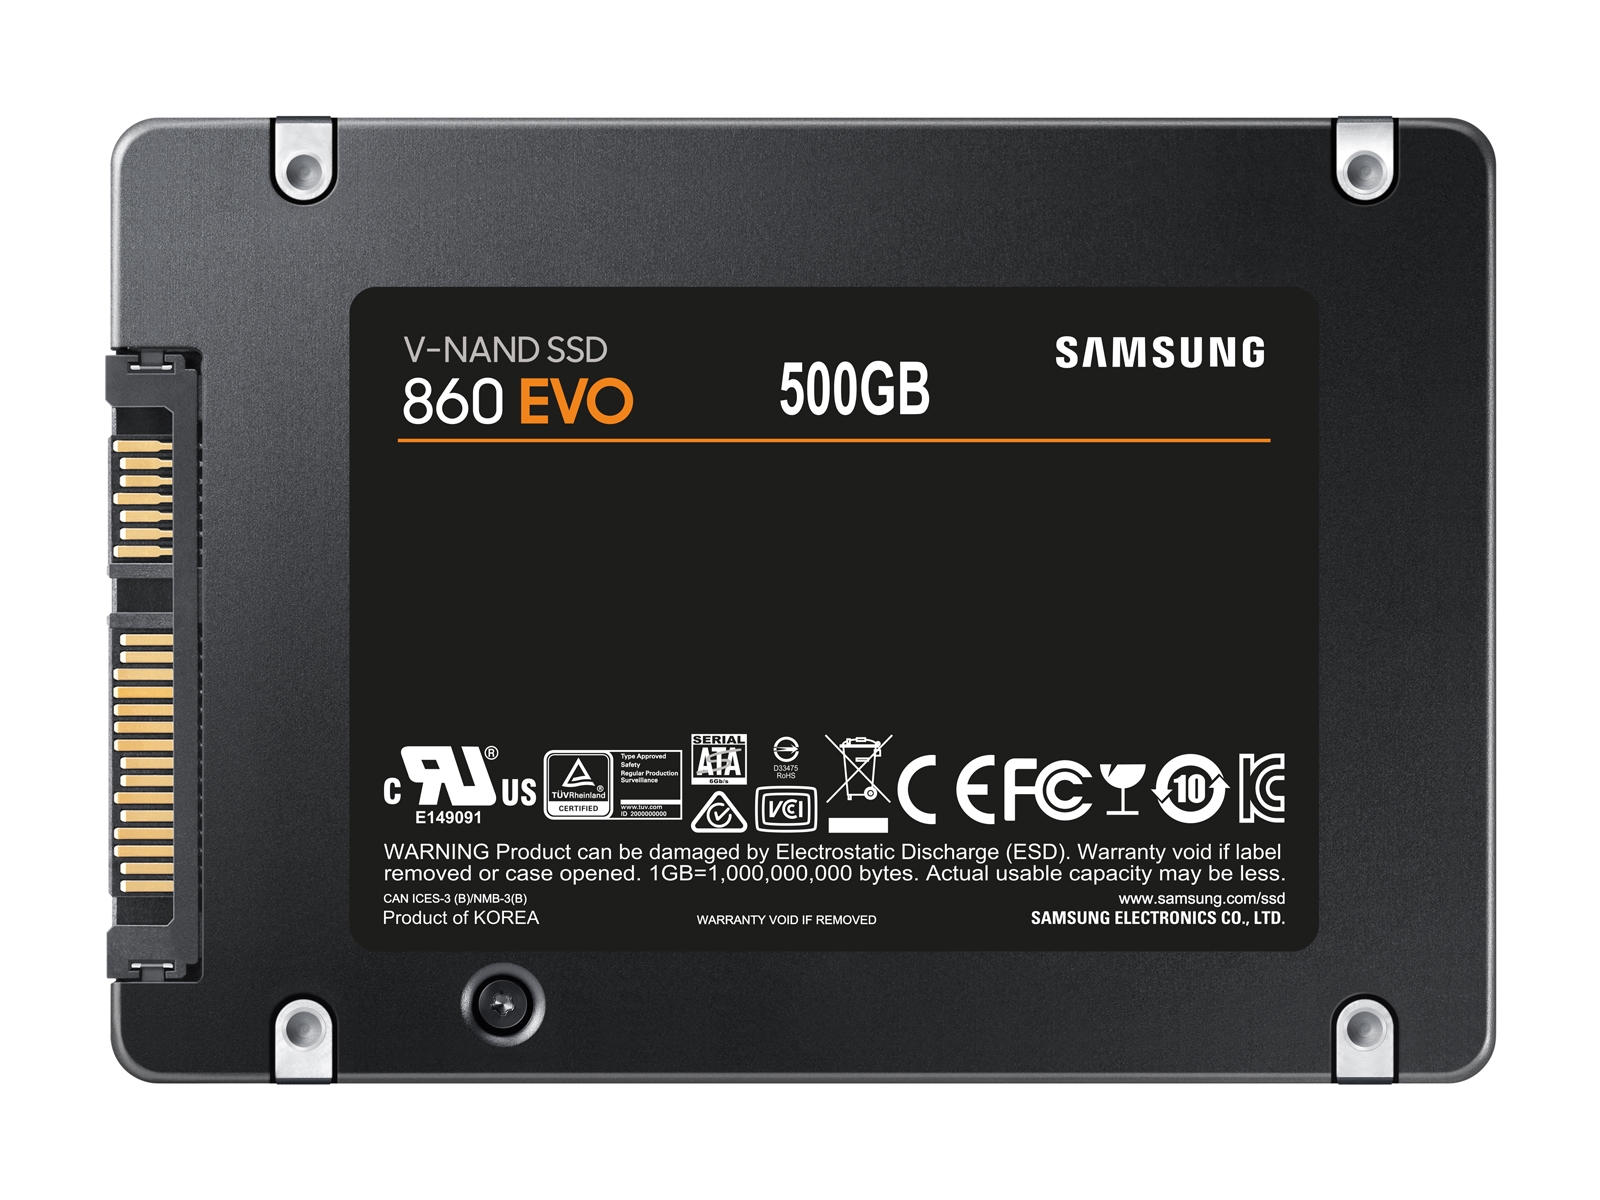 Maiden gentage lektie SSD 860 EVO 2.5" SATA III 500GB Memory & Storage - MZ-76E500B/AM | Samsung  US